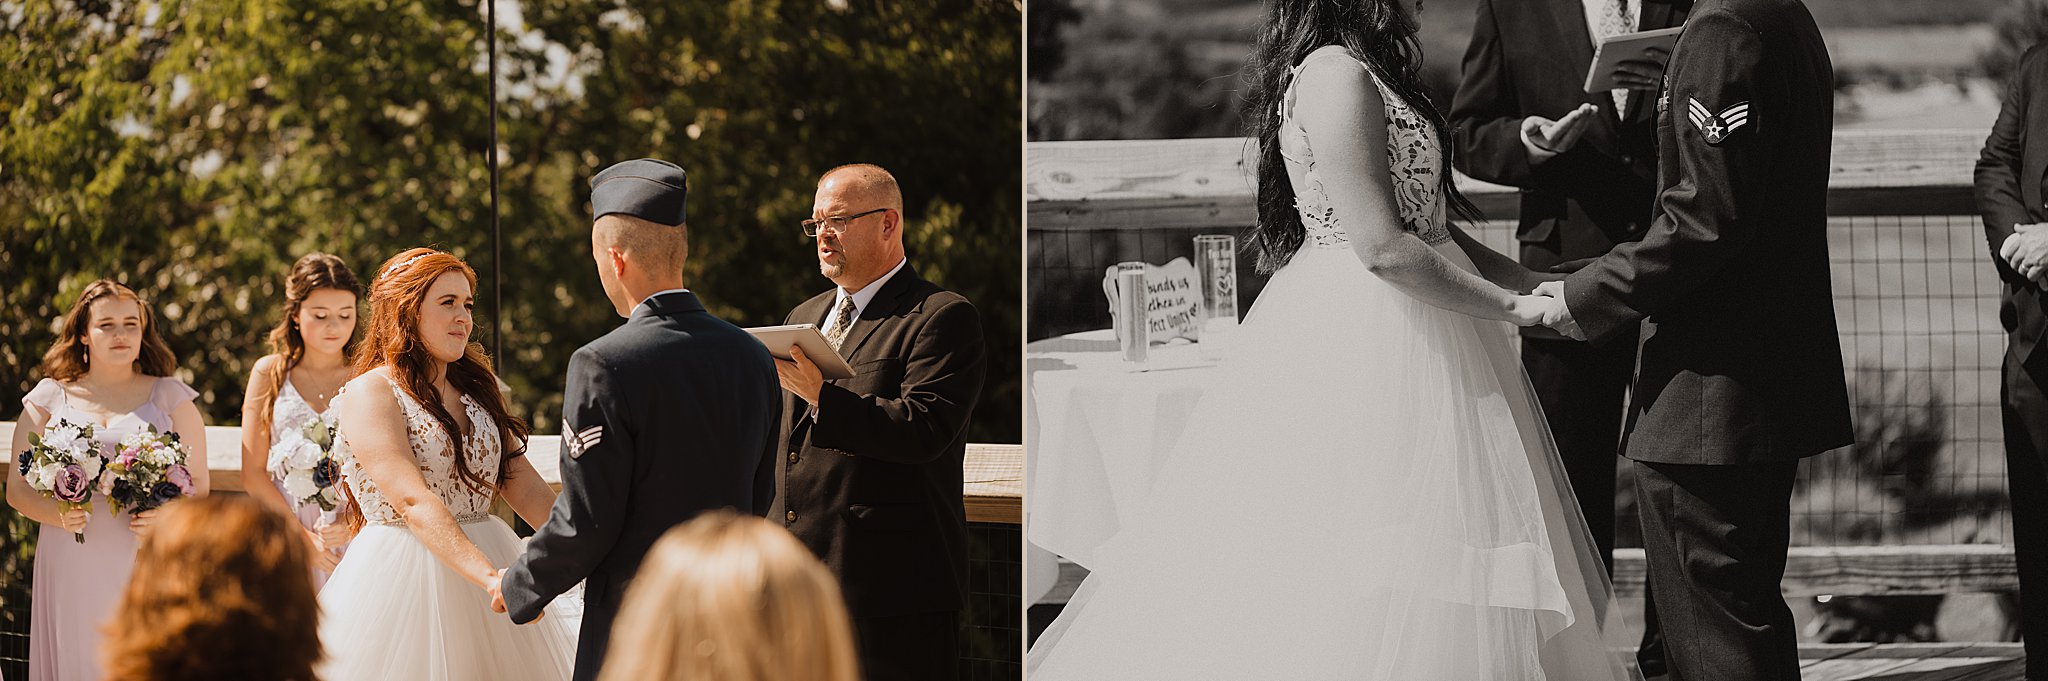 Chaumette Winery Wedding Ceremony | STL Wedding Photographer